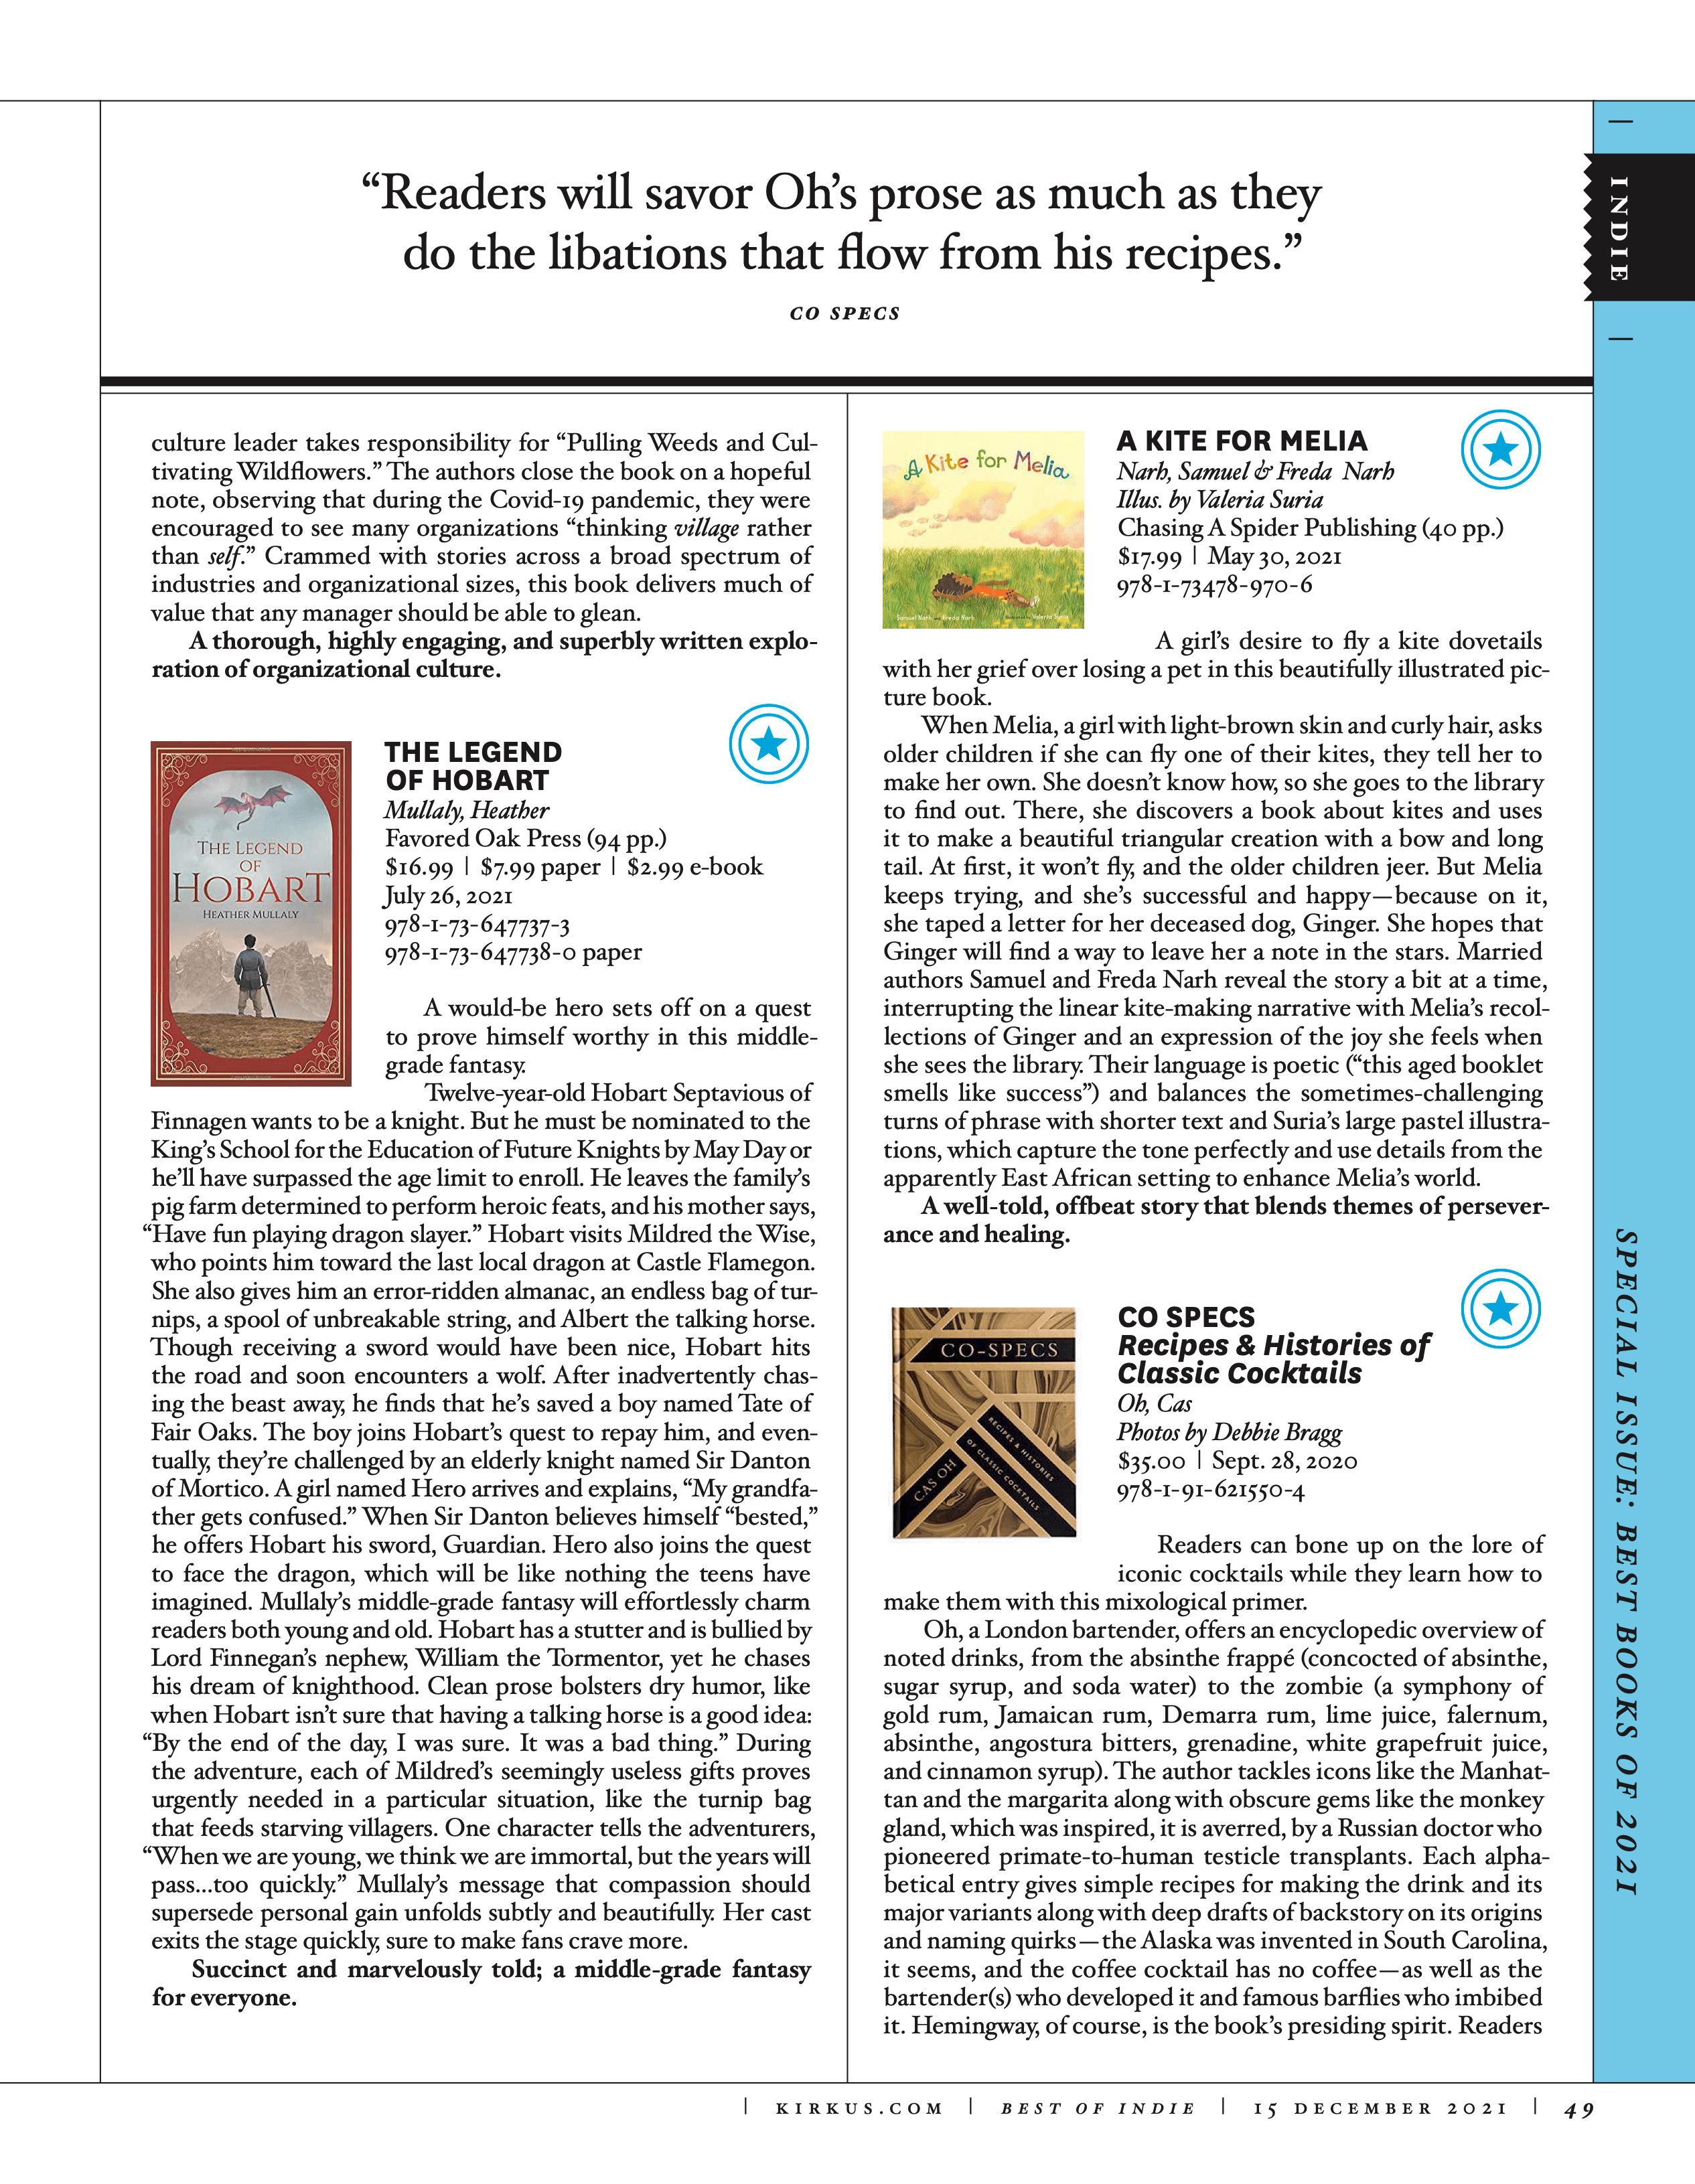 CO Specs by Cas Oh | Kirkus Best Books of 2021